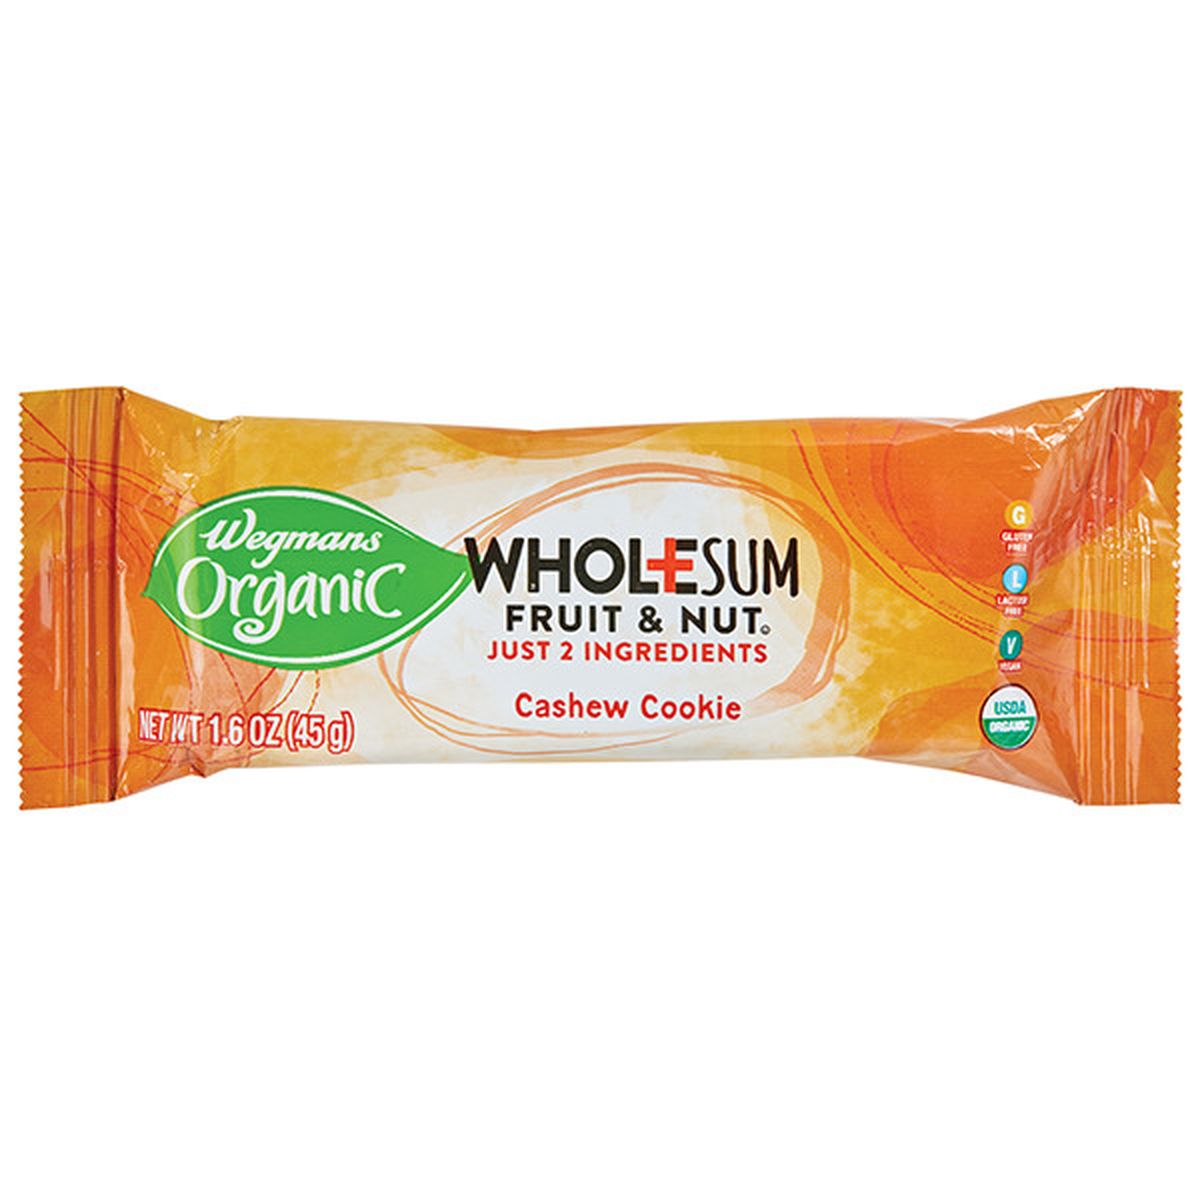 Calories in Wegmans Organic Cashew Cookie Wholesum Fruit & Nut Bar